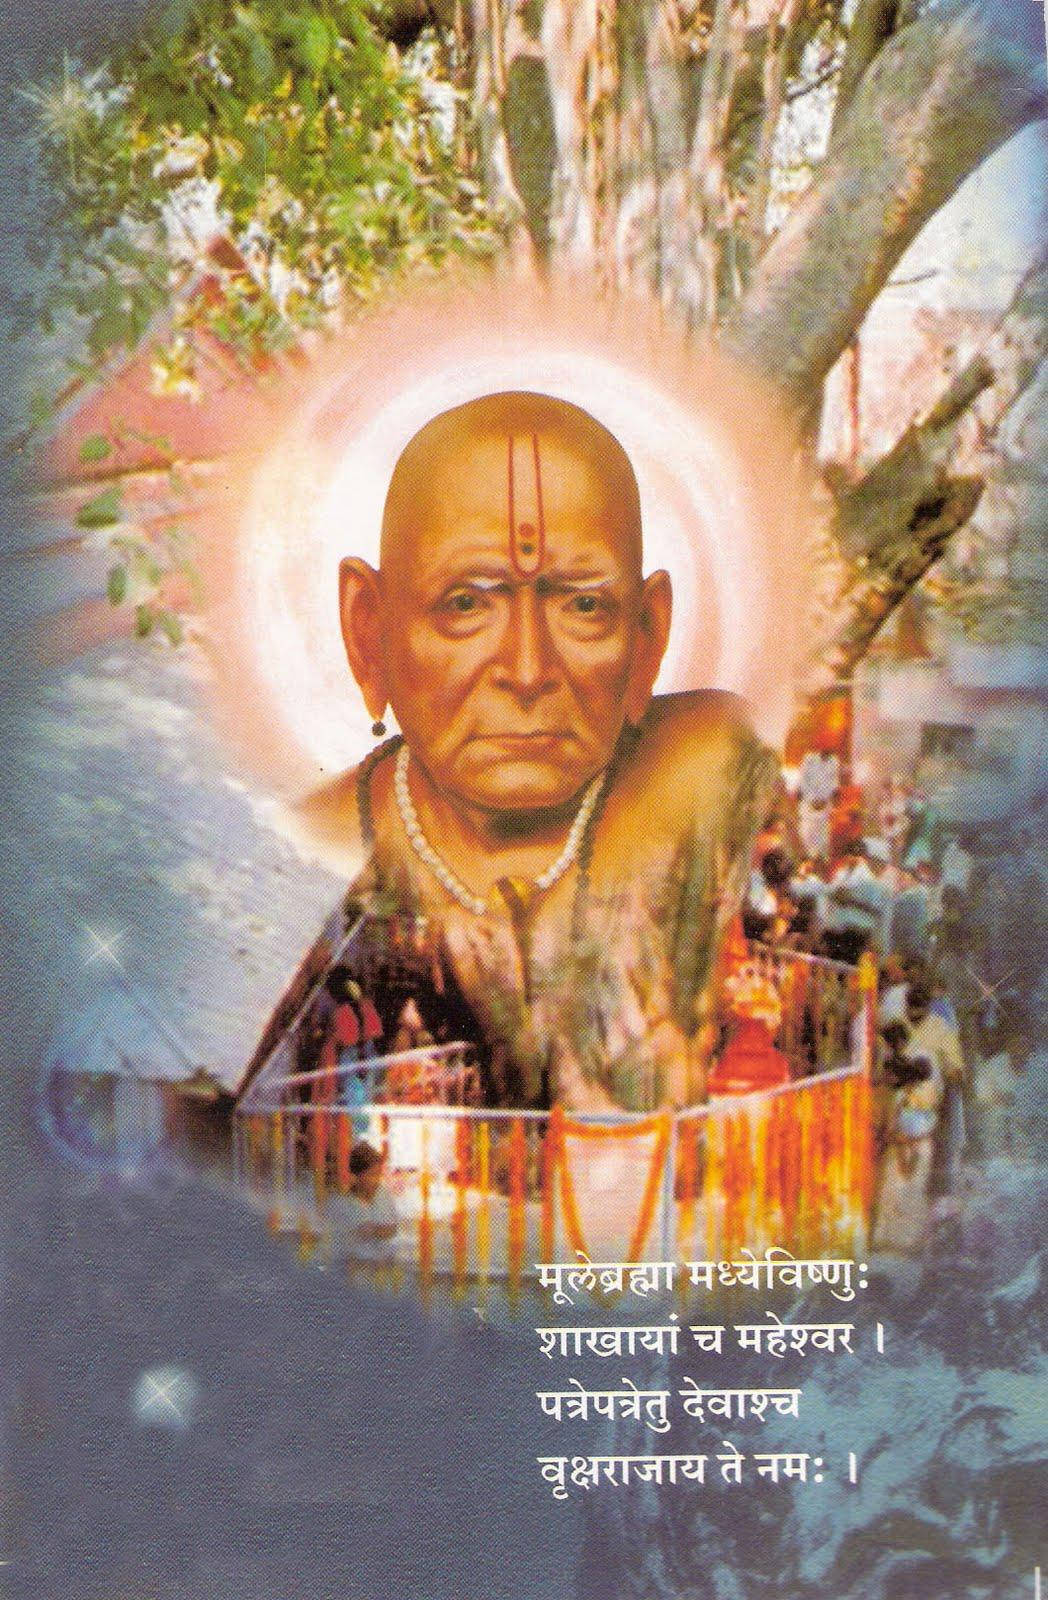 Download Shri Swami Samarth On Tree Wallpaper | Wallpapers.com